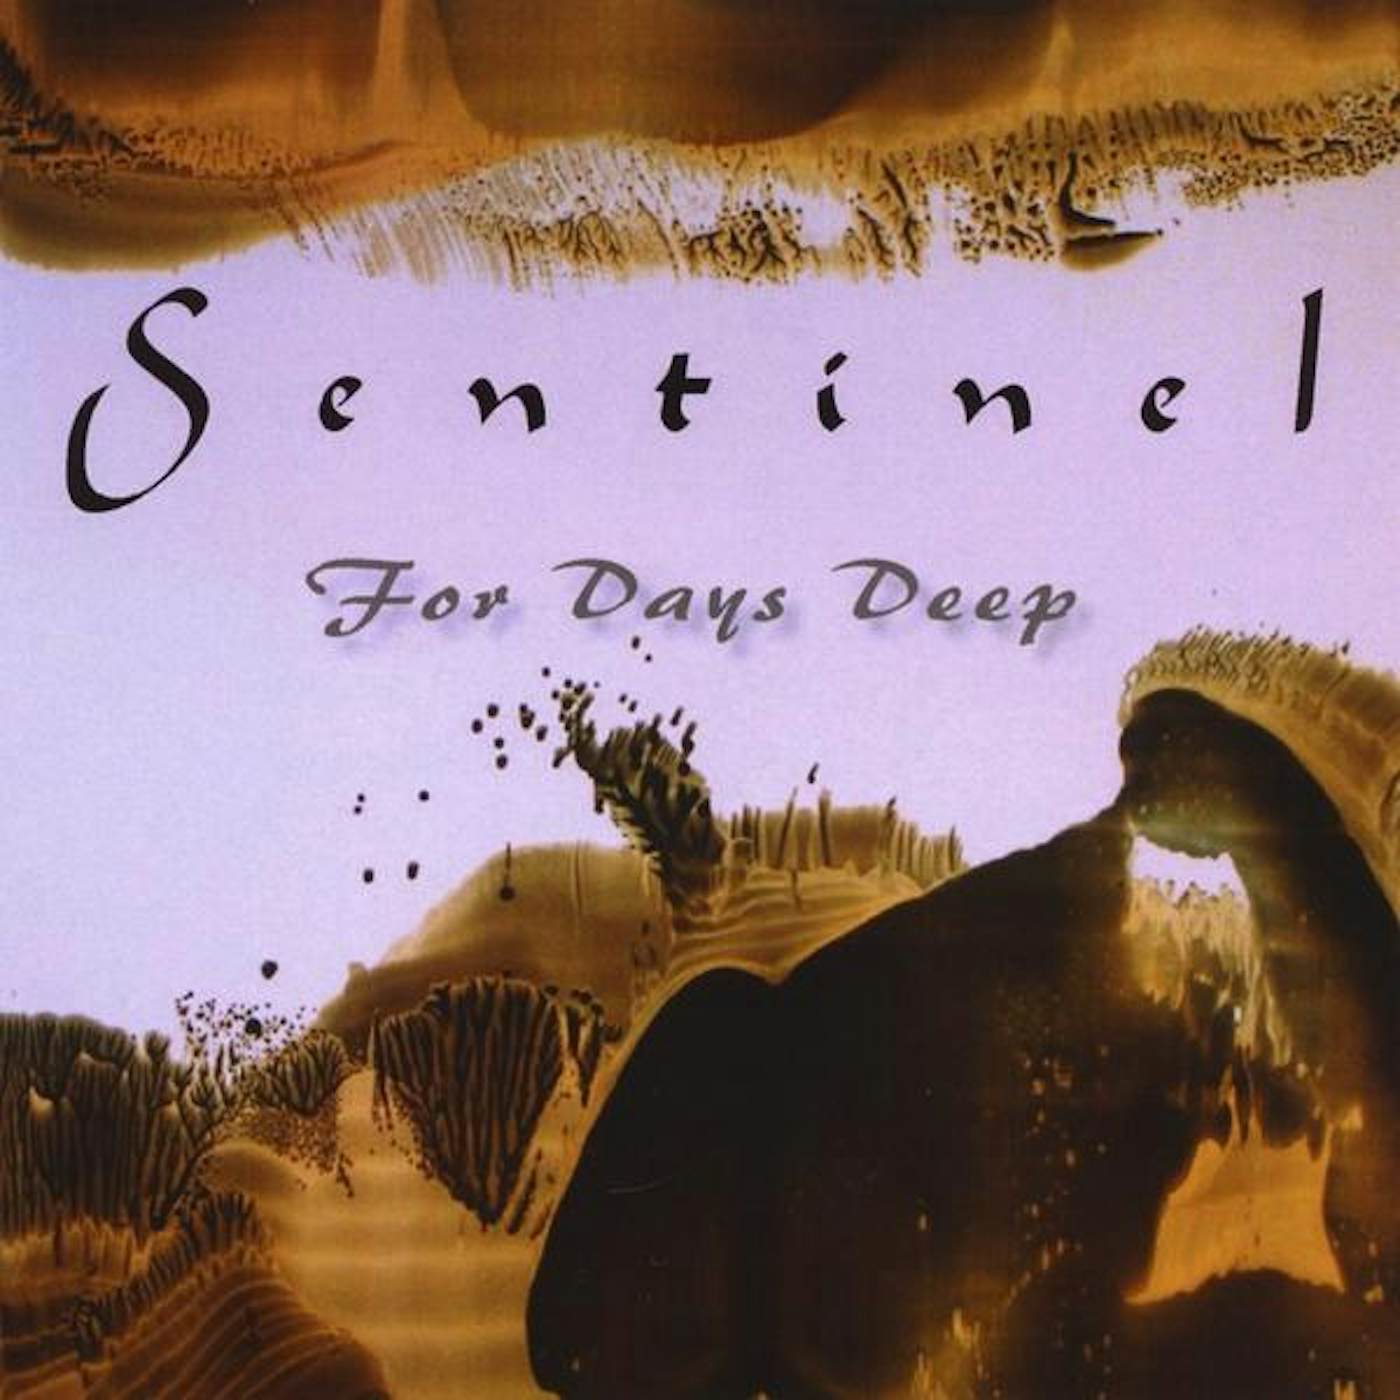  Sentinel FOR DAYS DEEP CD